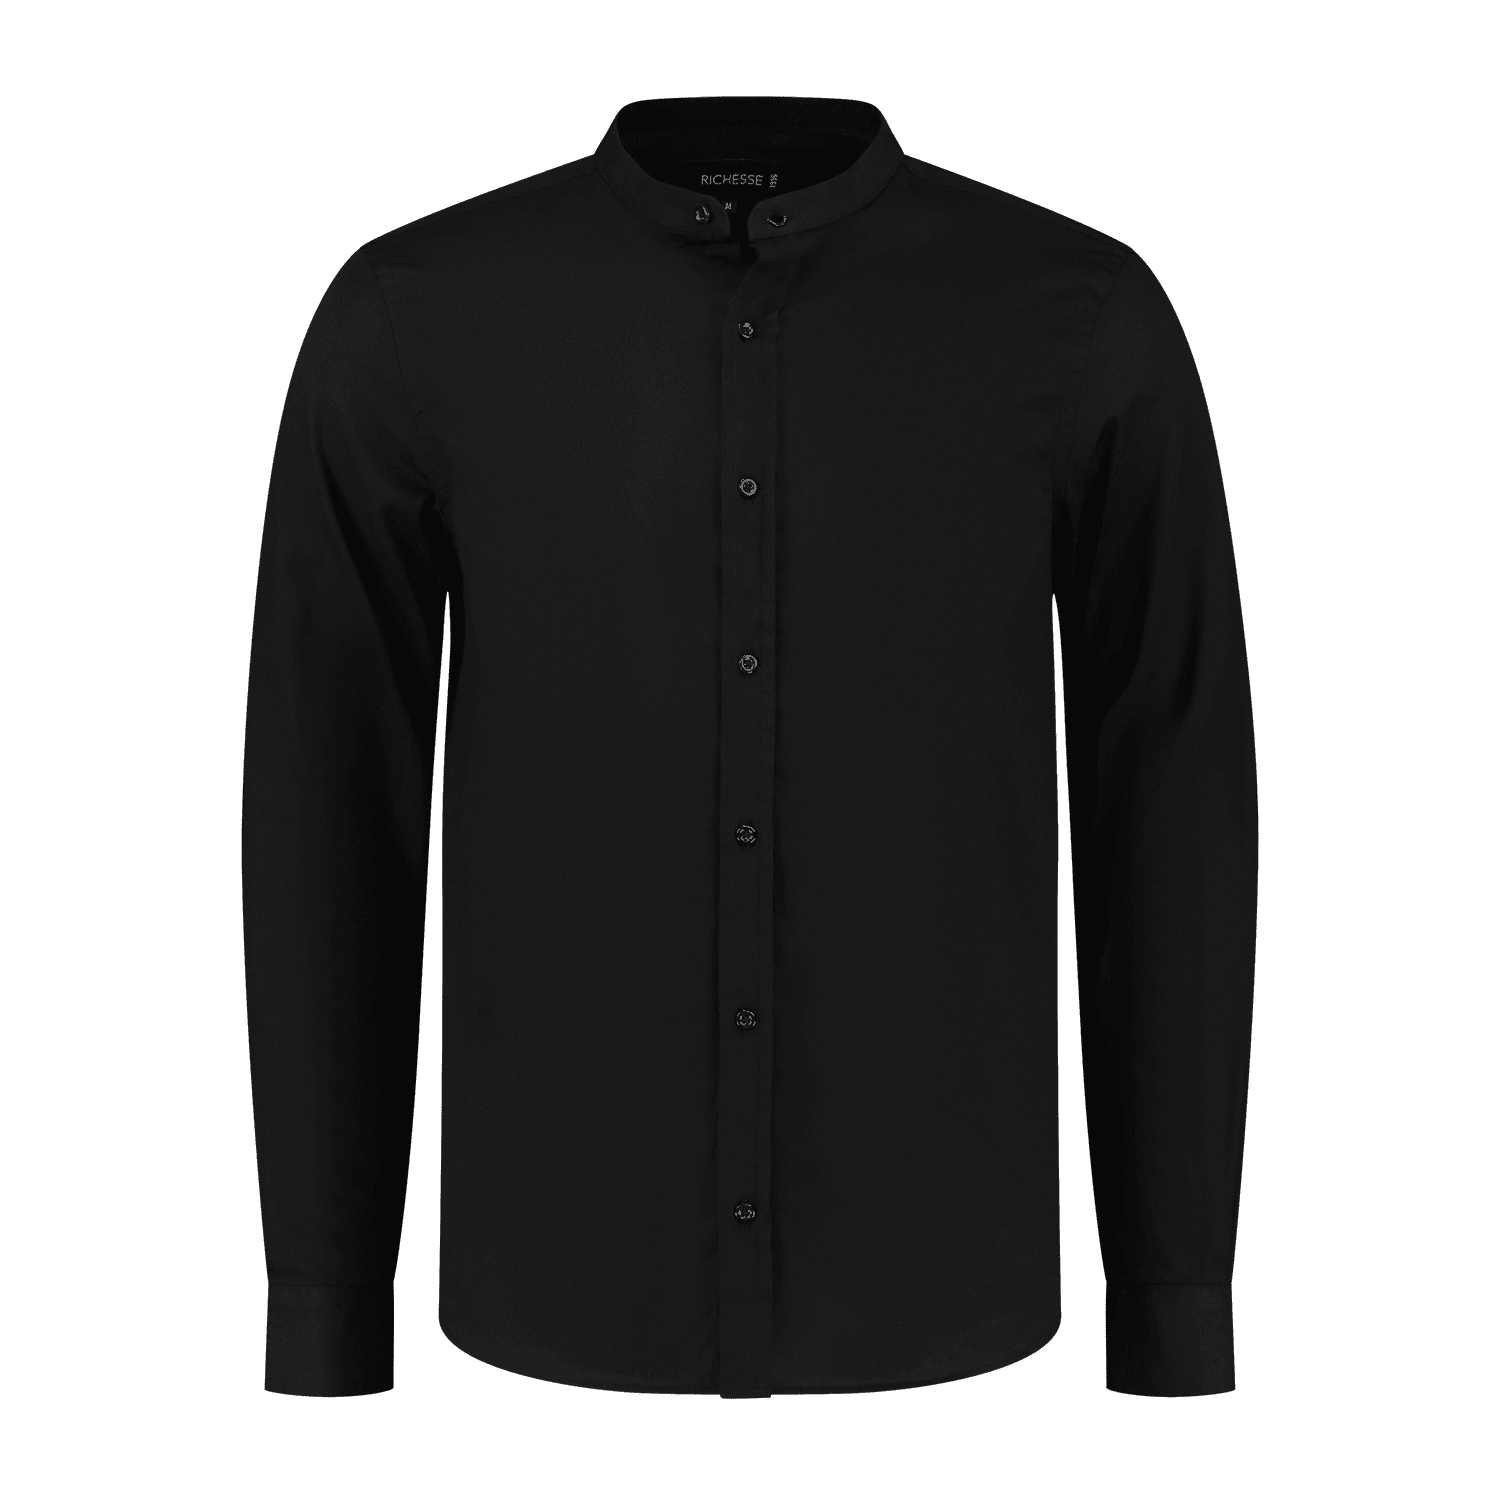 Mao Shirt Black Long